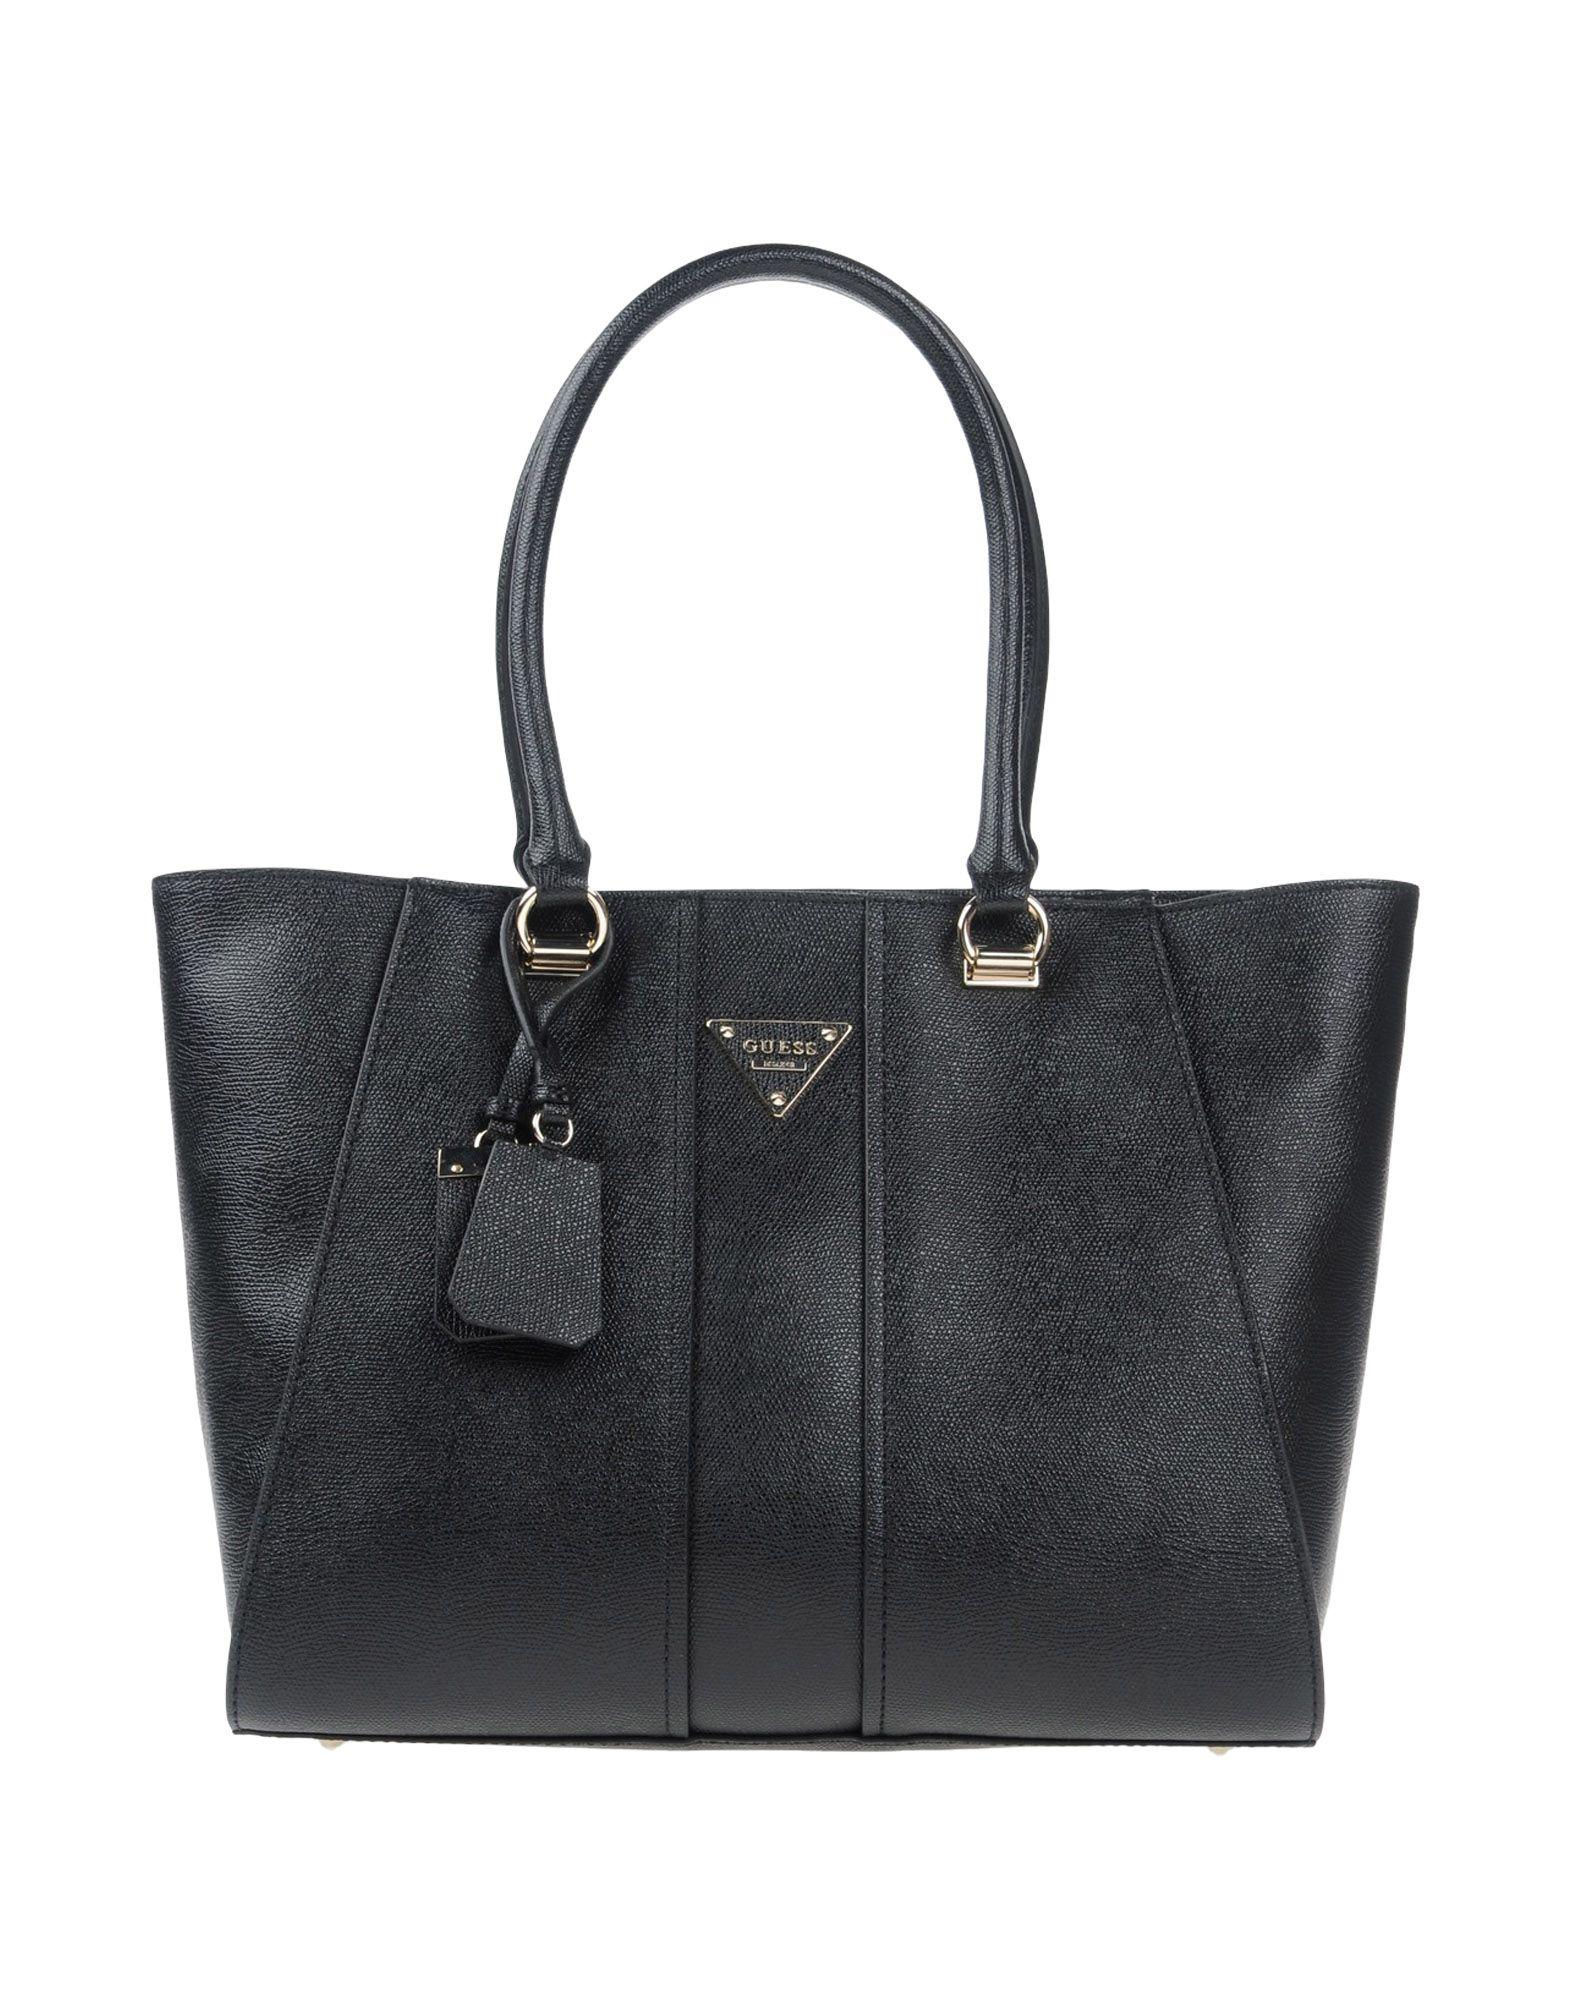 Guess Handbags In Black | ModeSens